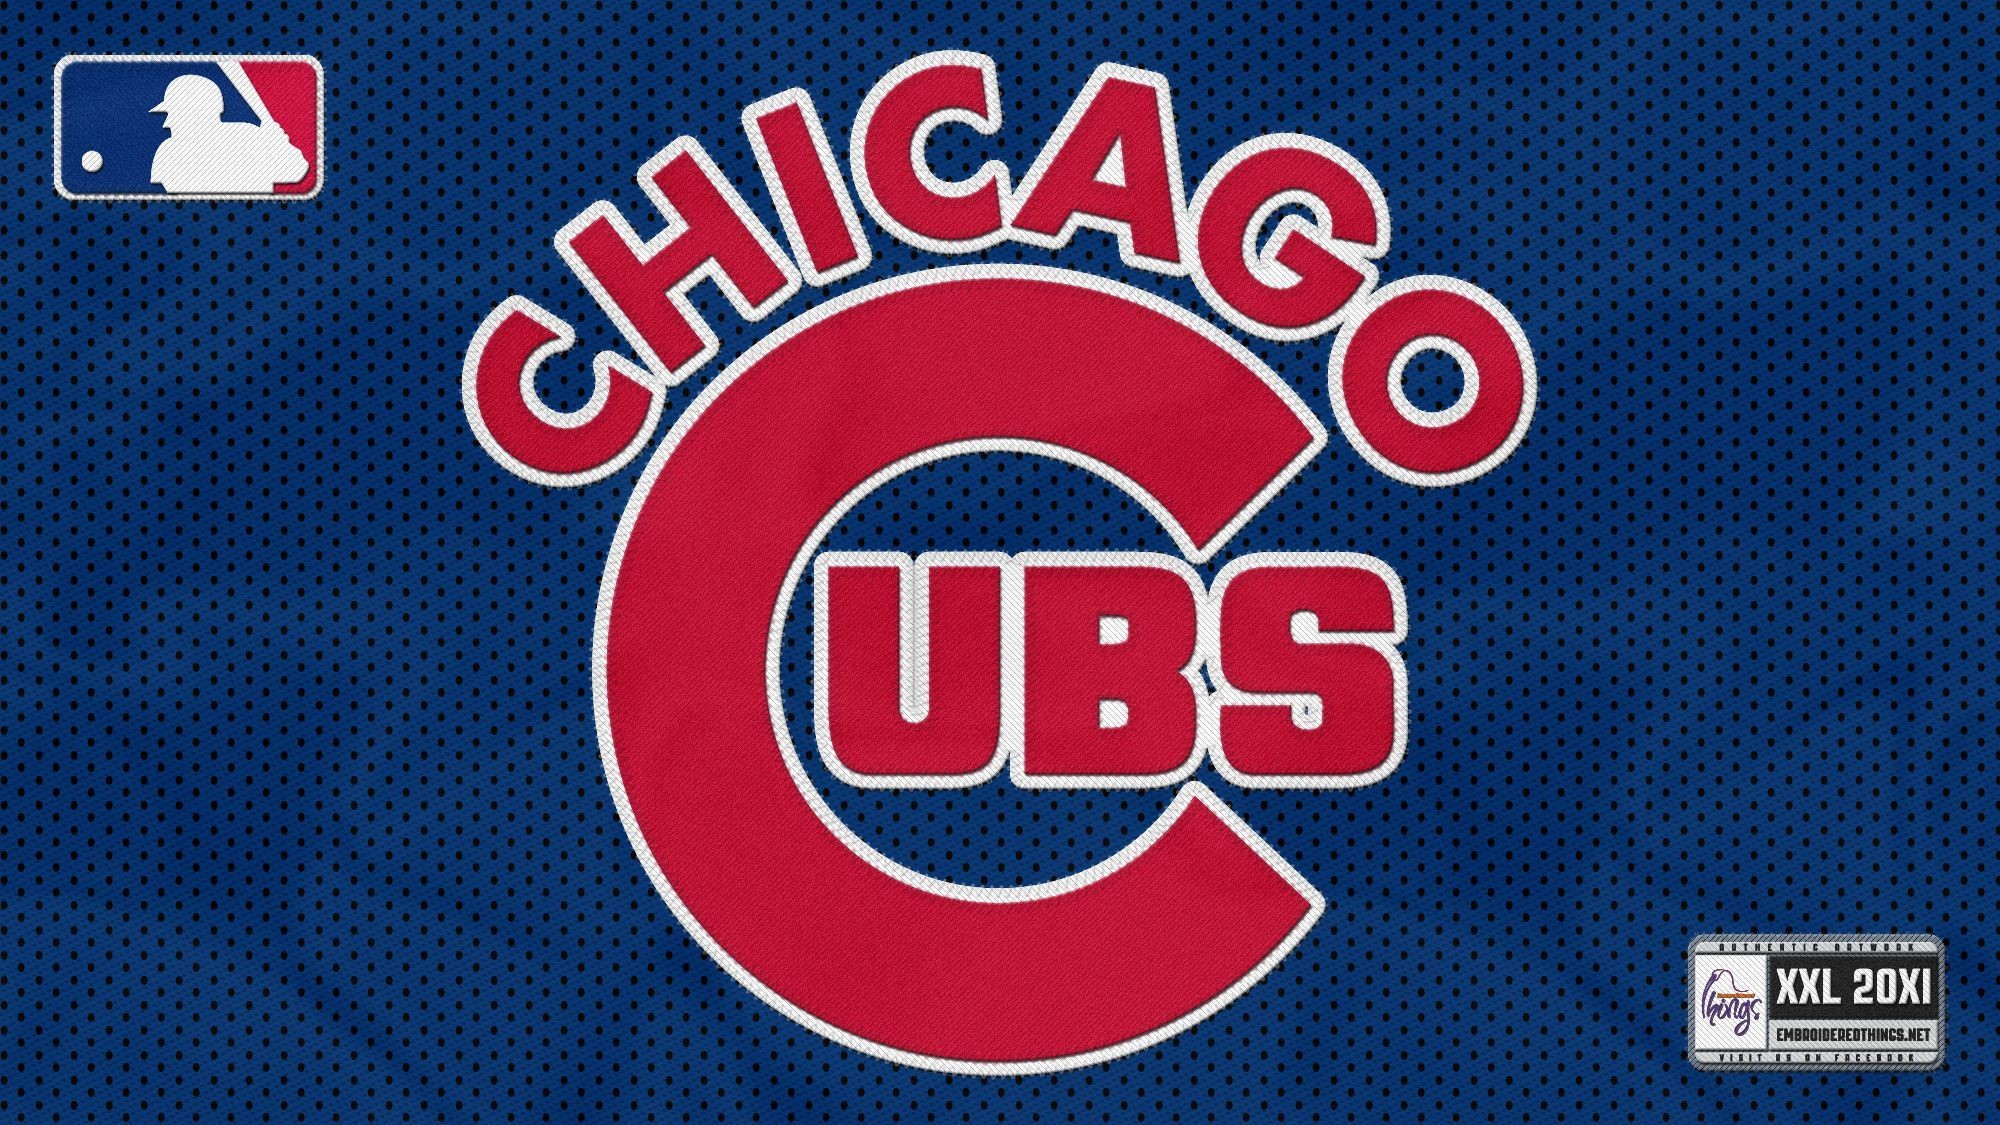 2000x1125 chicago cubs Full Screen Wallpaper | Chicago Cubs HD images | Chicago Cubs  wallpapers